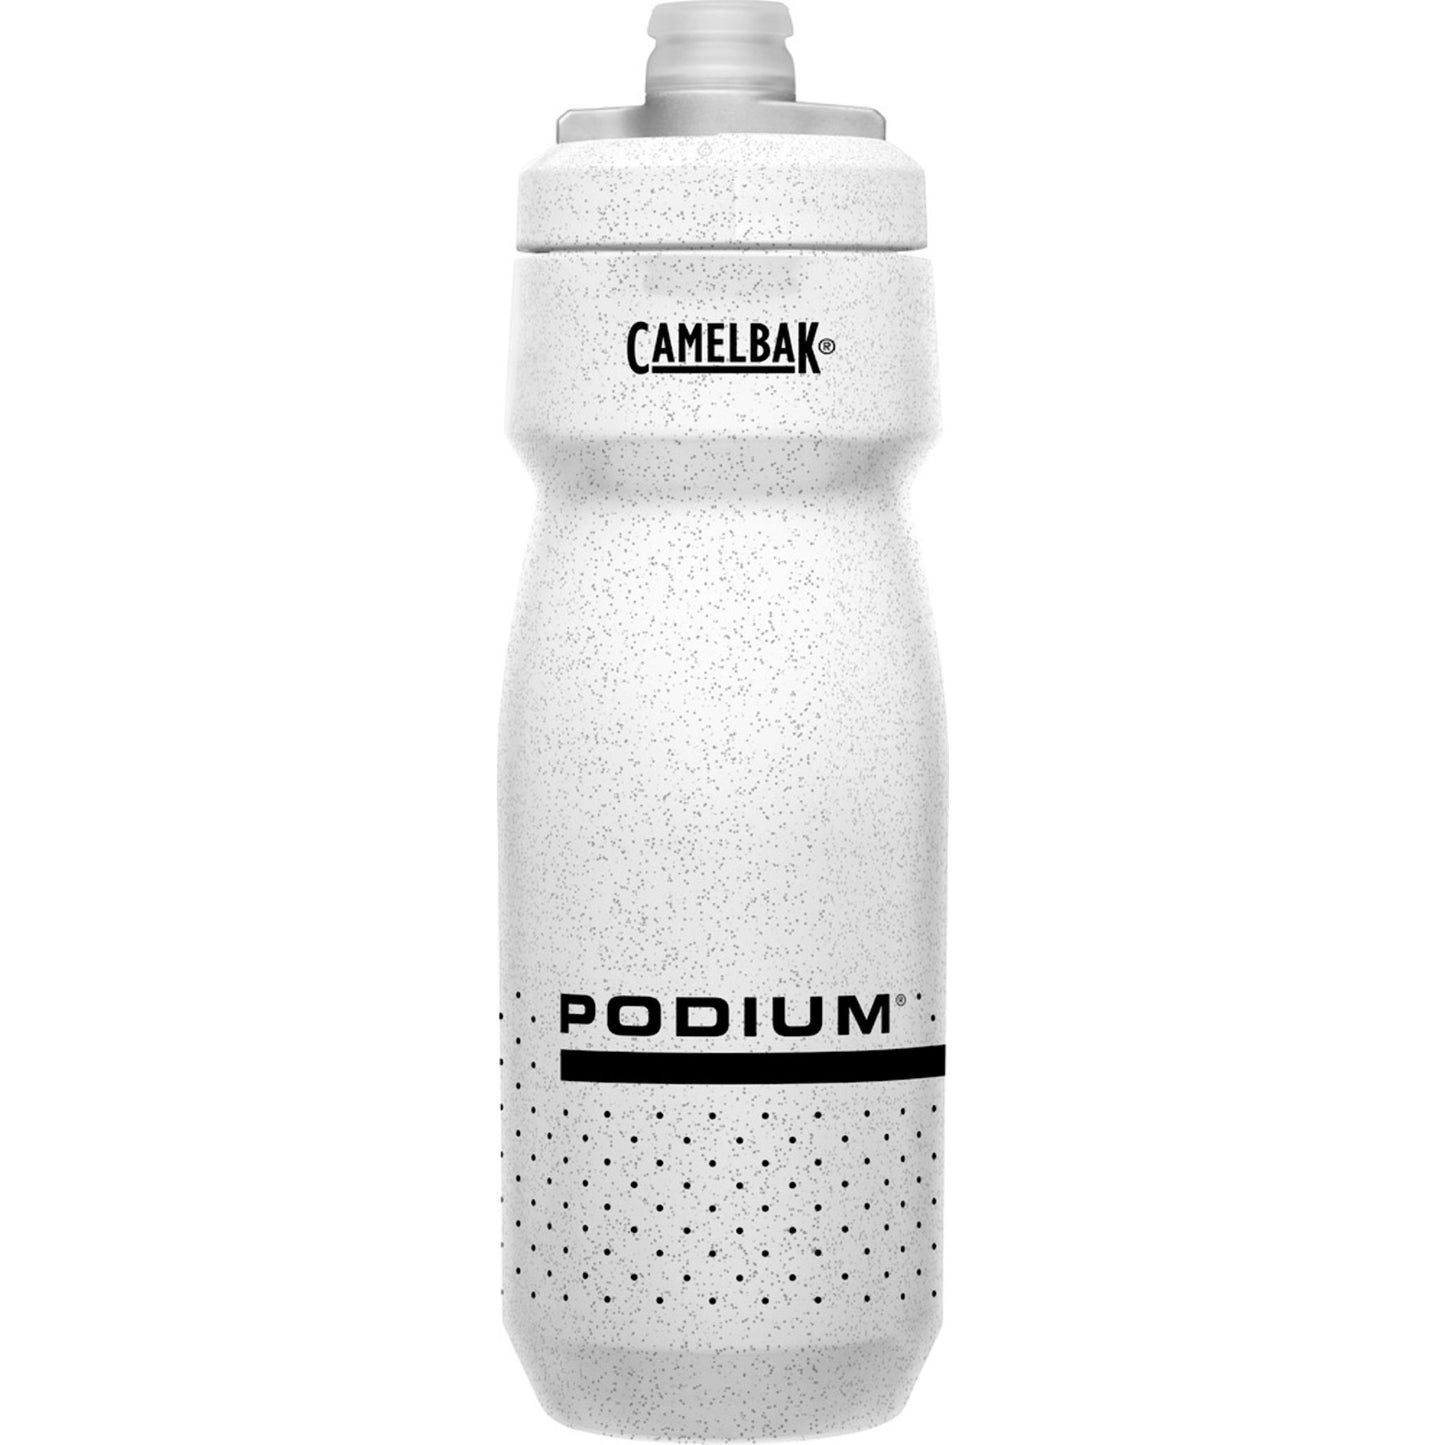 Camelbak Podium Water Bottle 700ml - White Speckle, Woolys Wheels bike shop Sydney